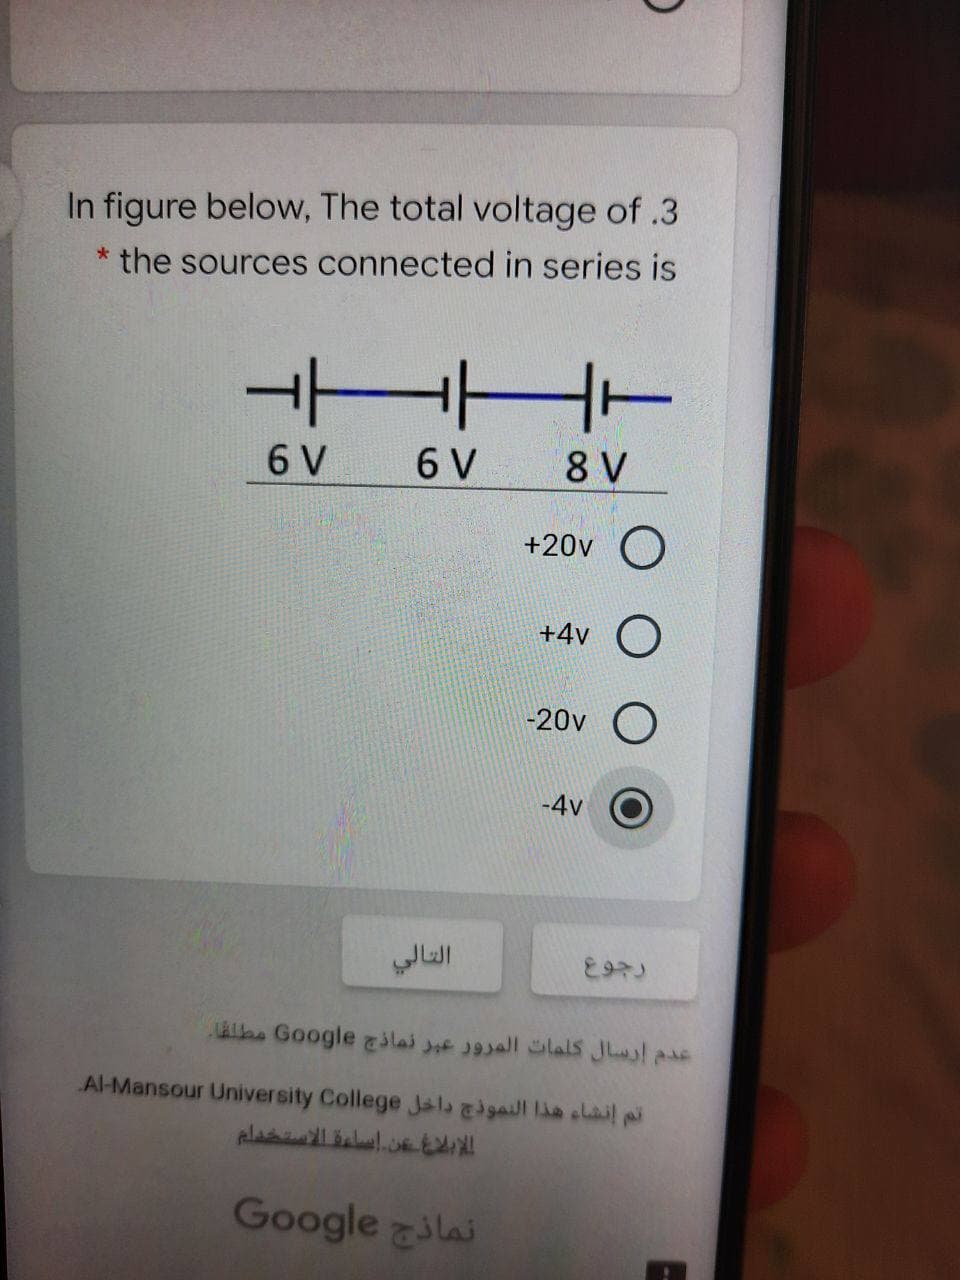 In figure below, The total voltage of .3
* the sources connected in series is
6 V
6 V
8 V
+20v O
+4v O
-20v O
-4v
NAllbo Google z slas e 19all lals Jlus! ase
Al-Mansour University College Jalagaill la clil pi
Google lai
